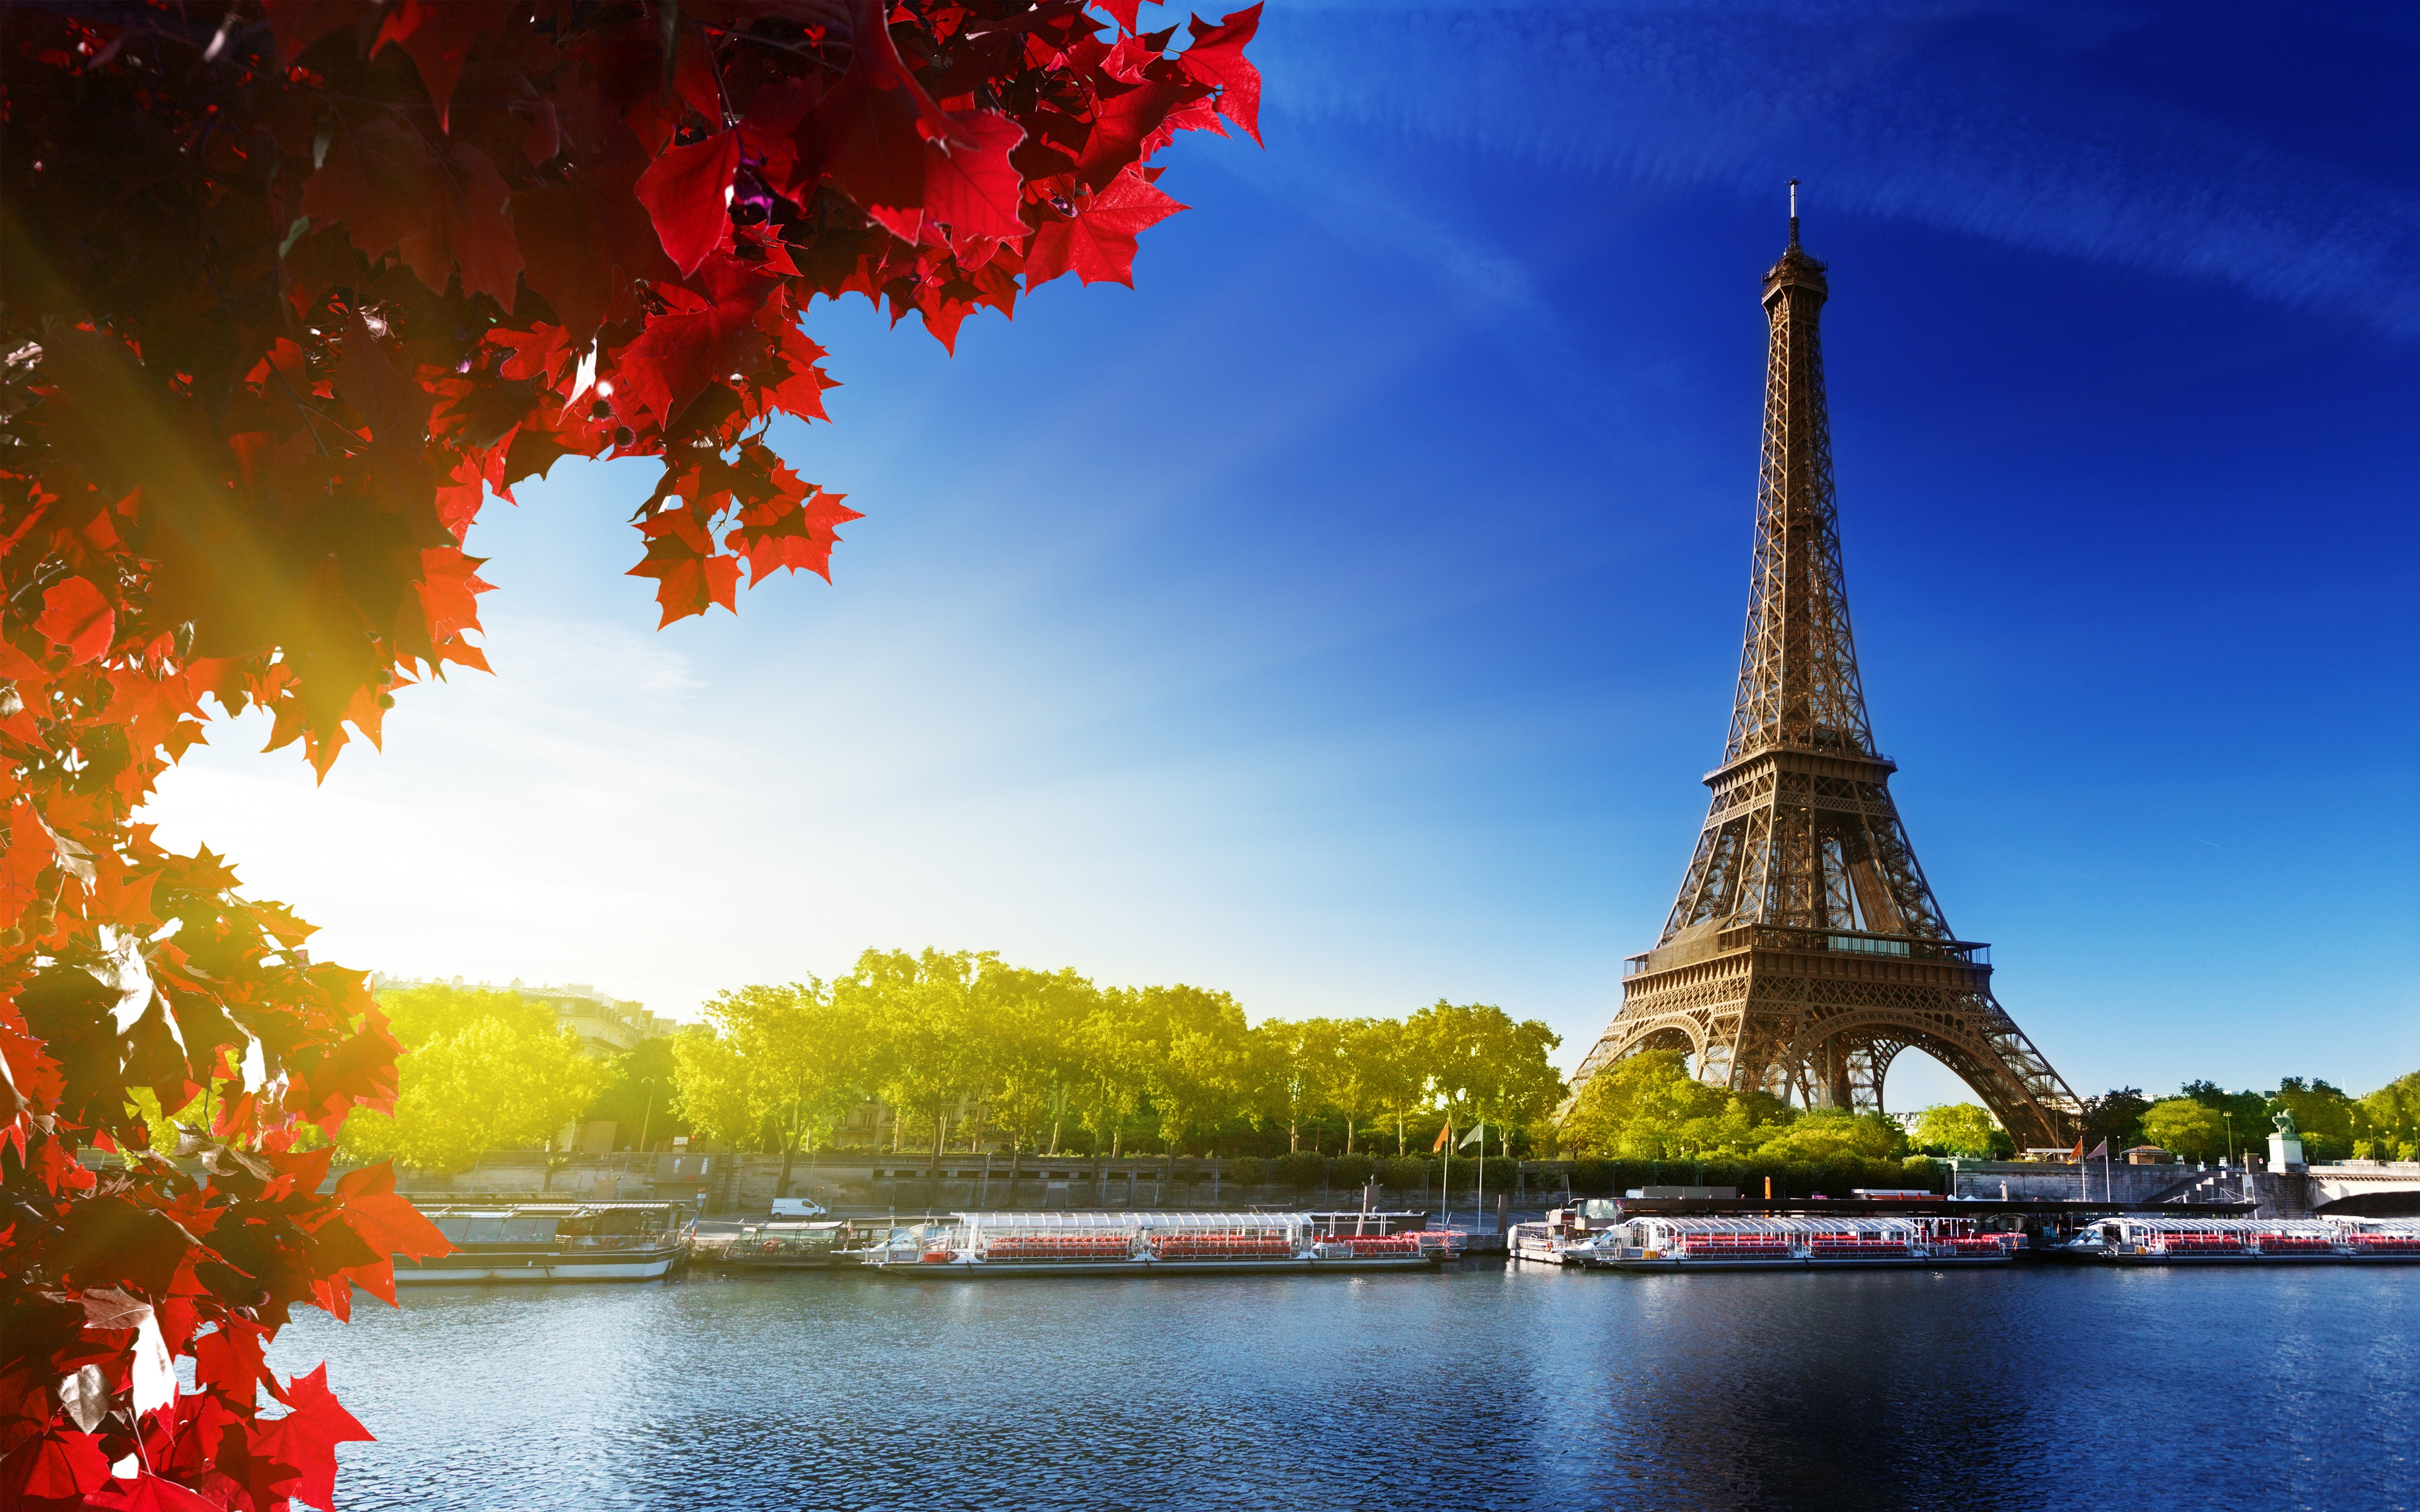 Eiffel Tower Paris for 8192 x 5120 8K Ultra Wide resolution